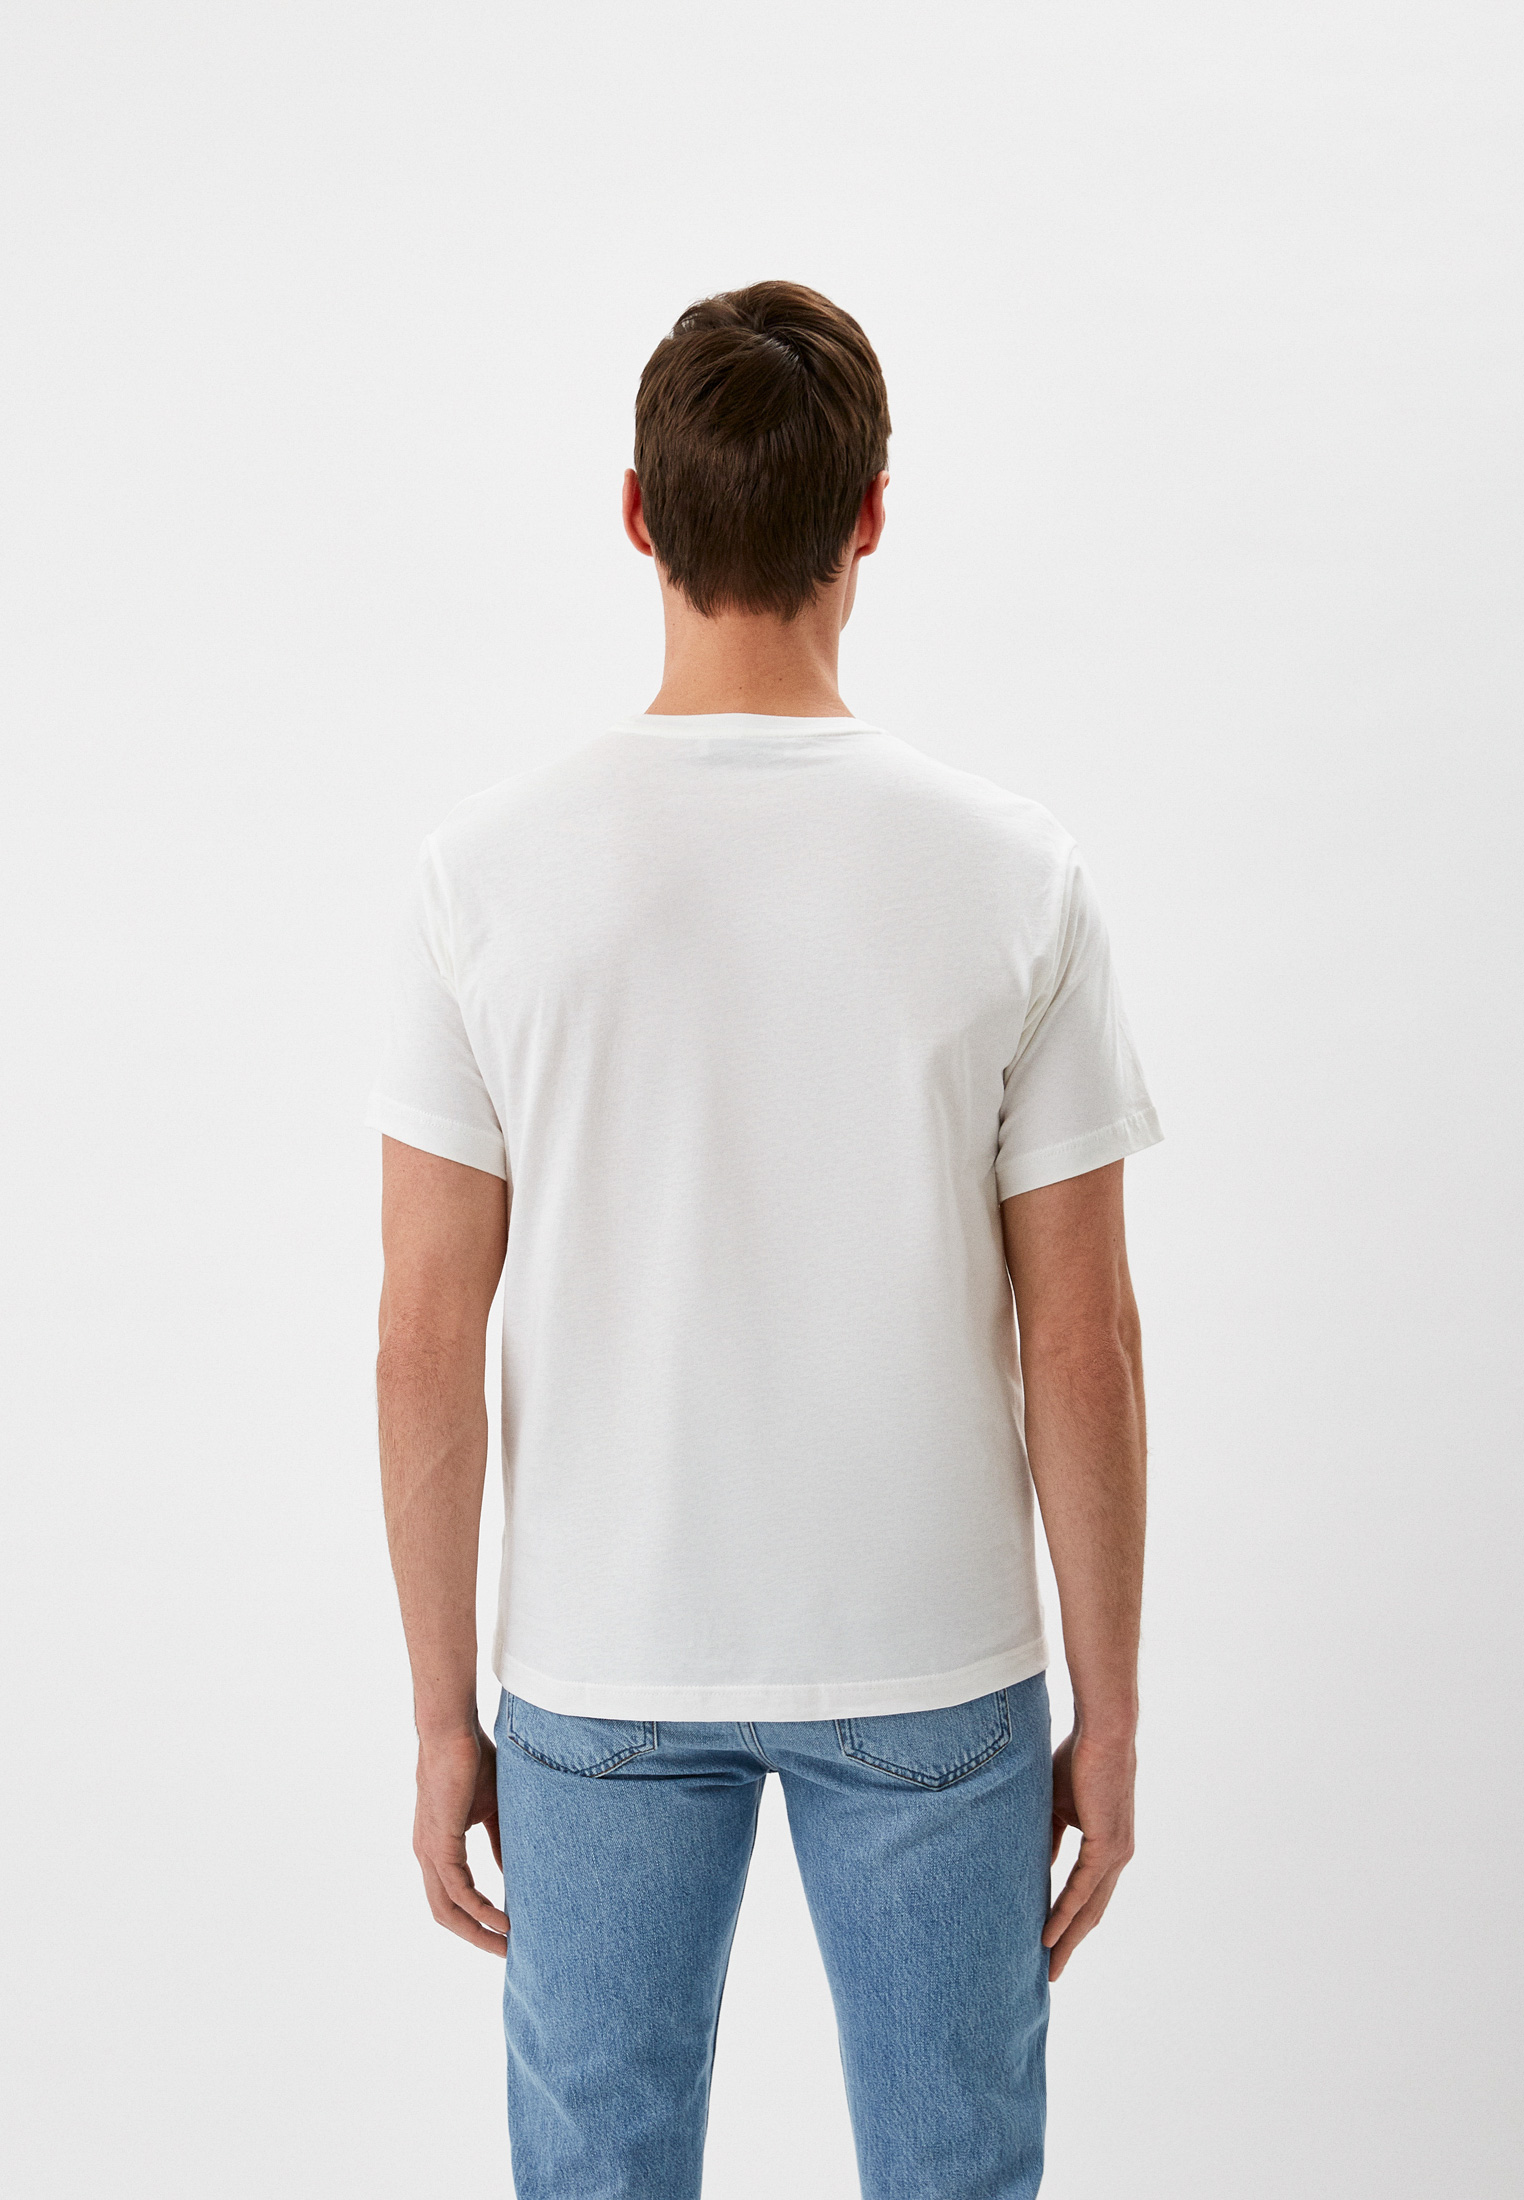 Мужская футболка Trussardi (Труссарди) 52T00595-1T005651: изображение 3